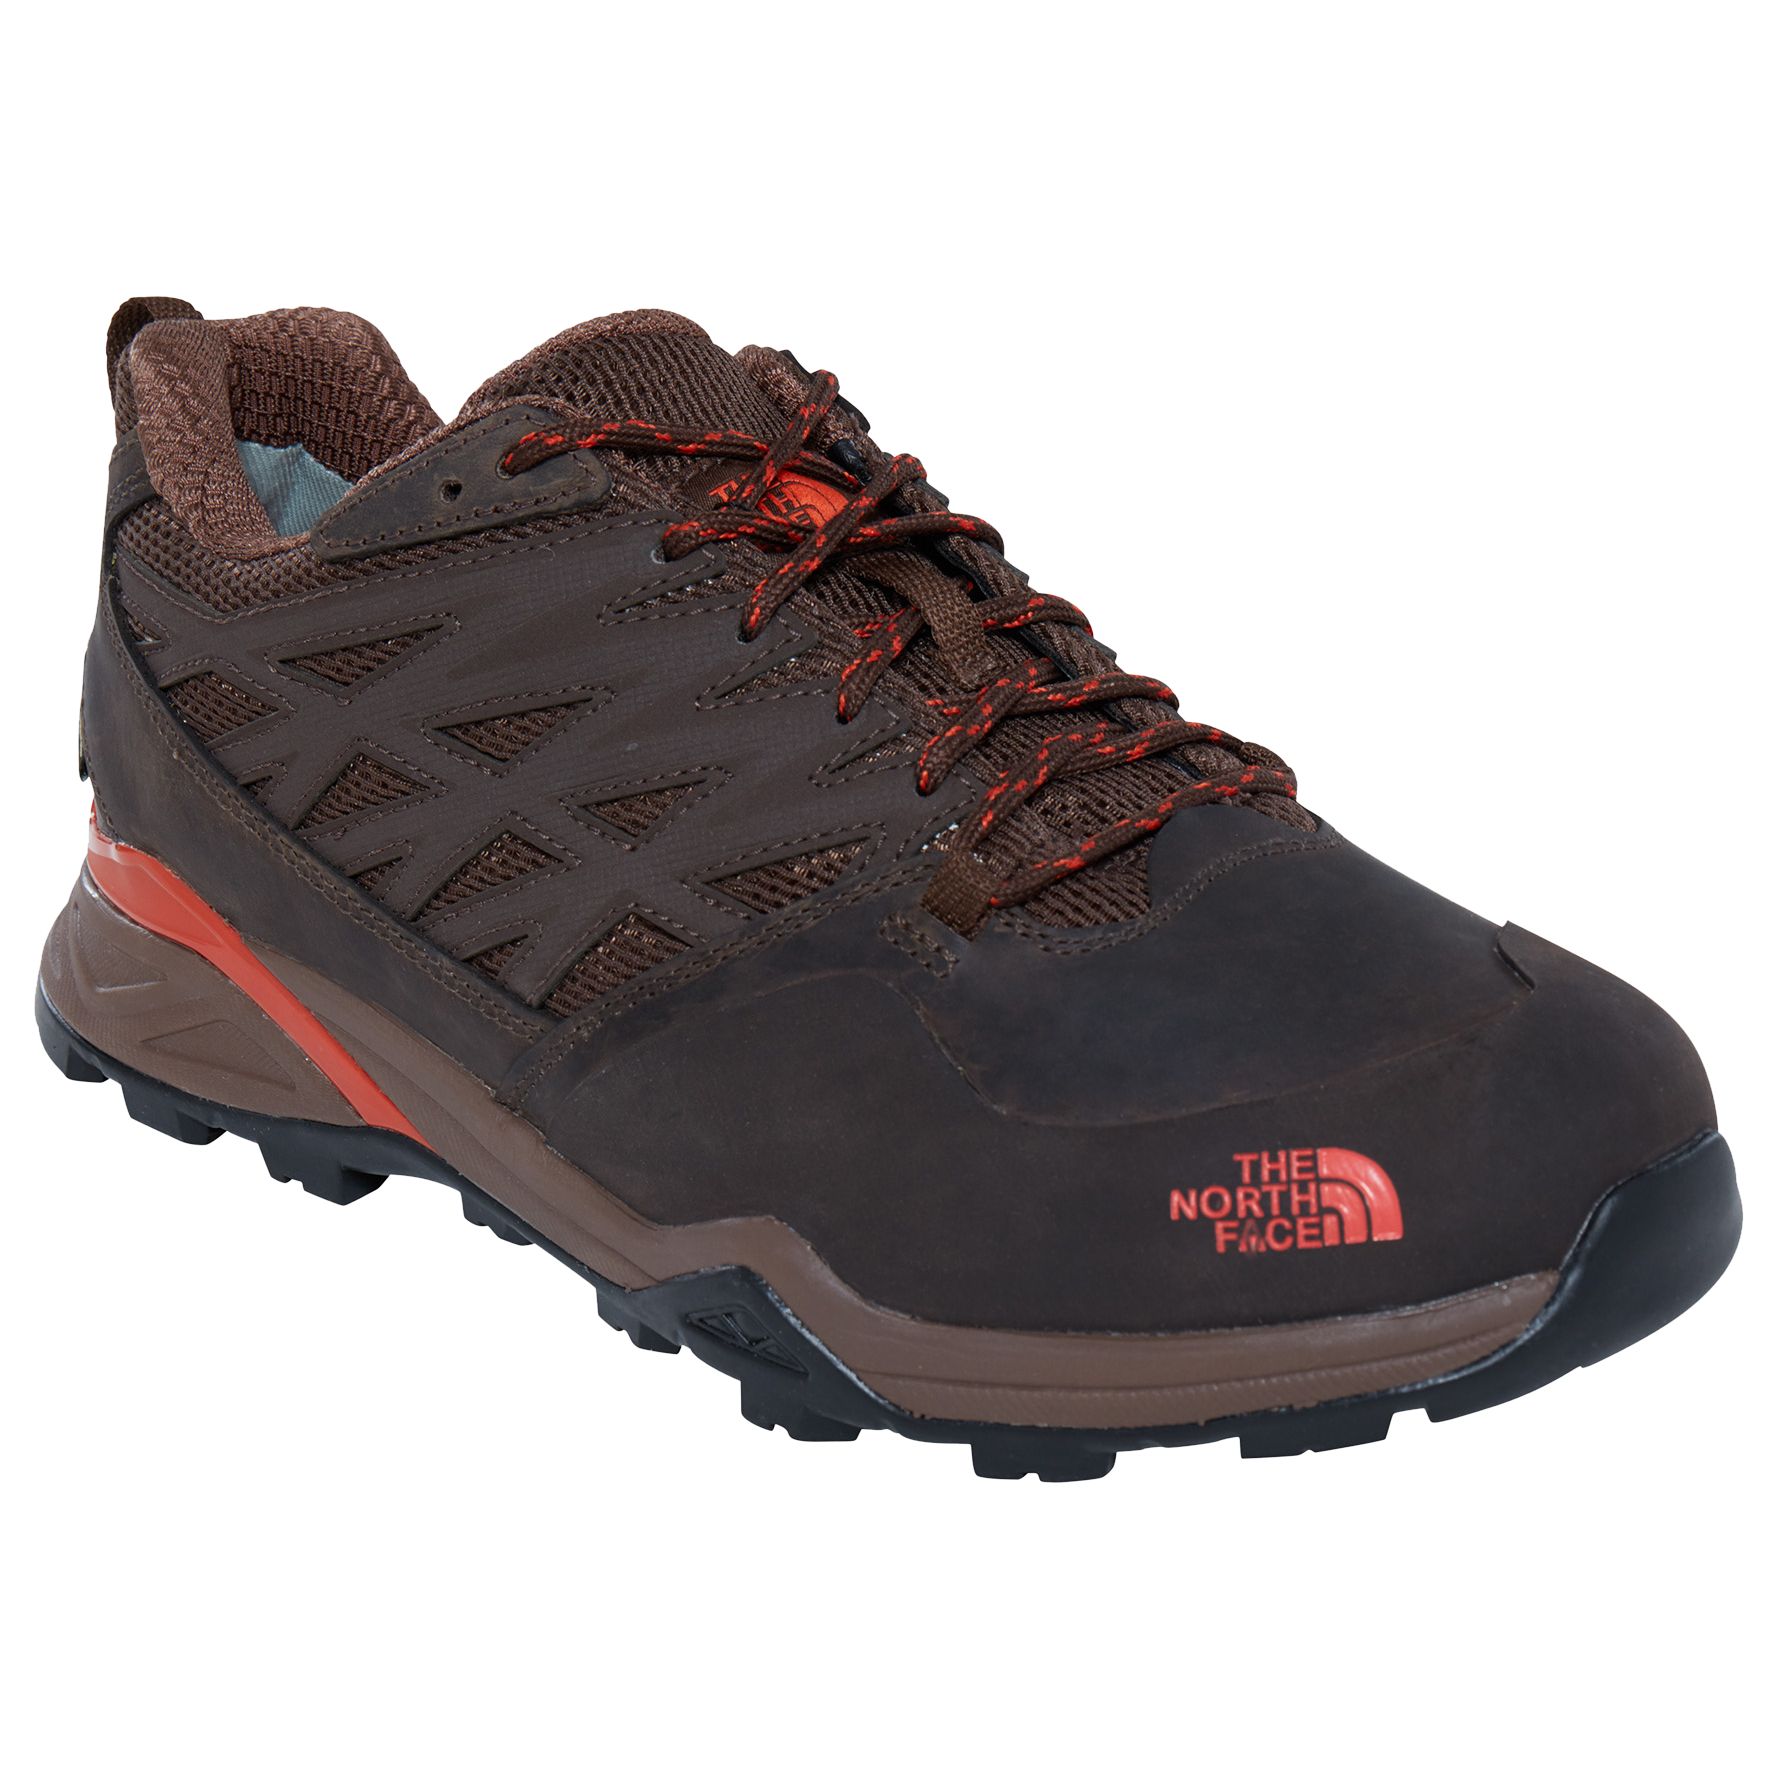 The North Face Hedgehog GTX Men's Waterproof Hiking Boots, Black/Brown, 10